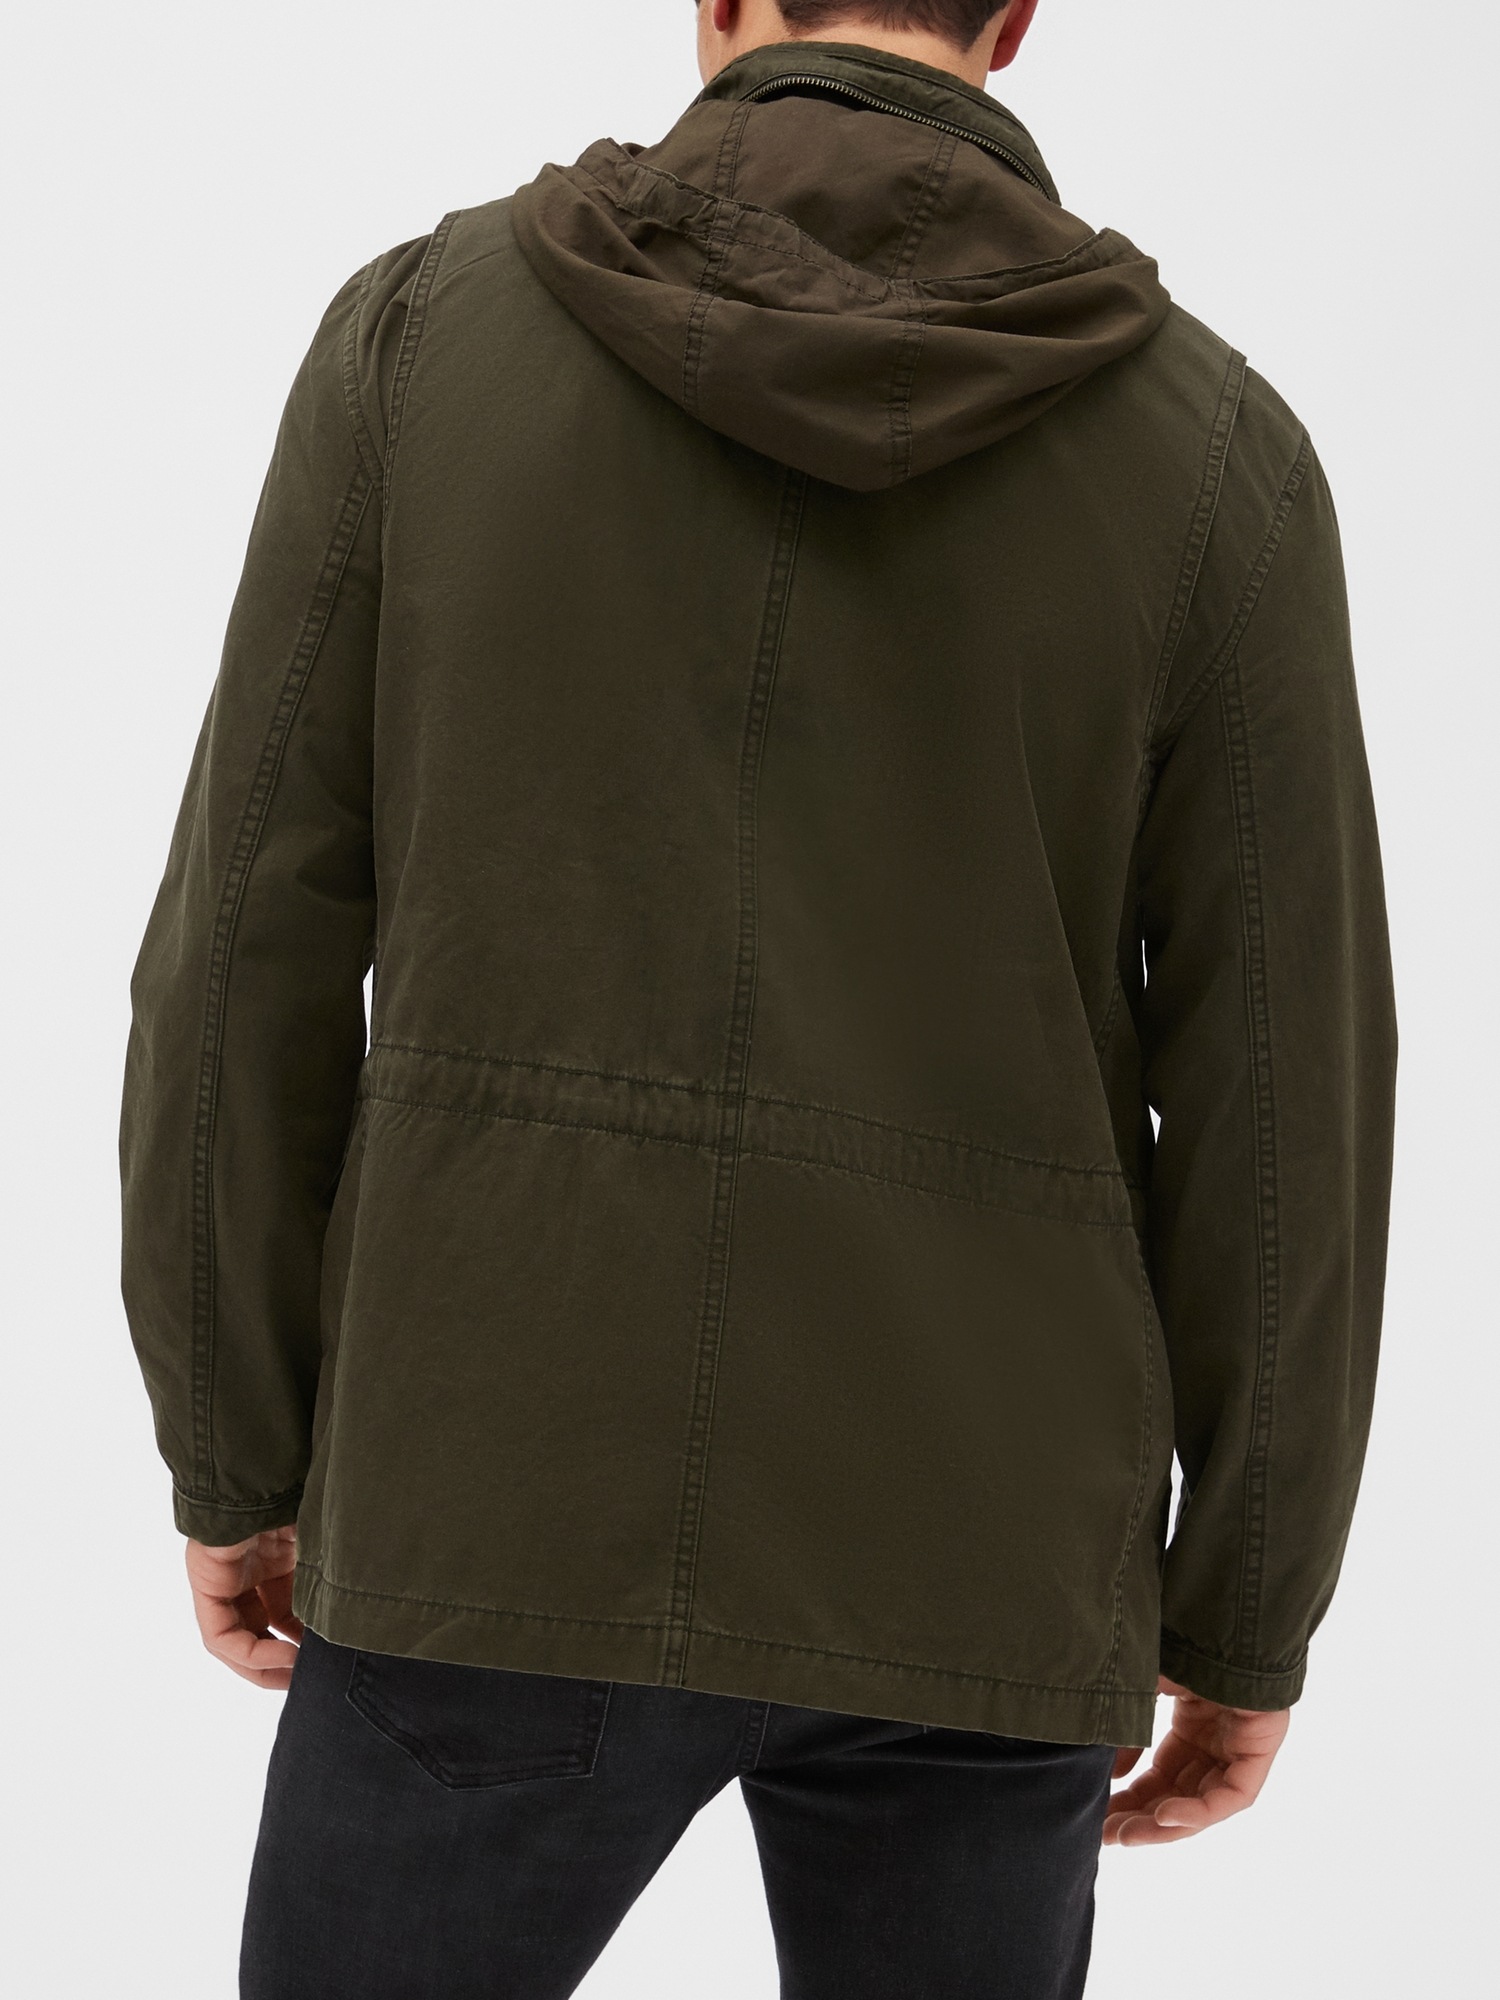 Military Jacket with Hidden Hood | Gap 